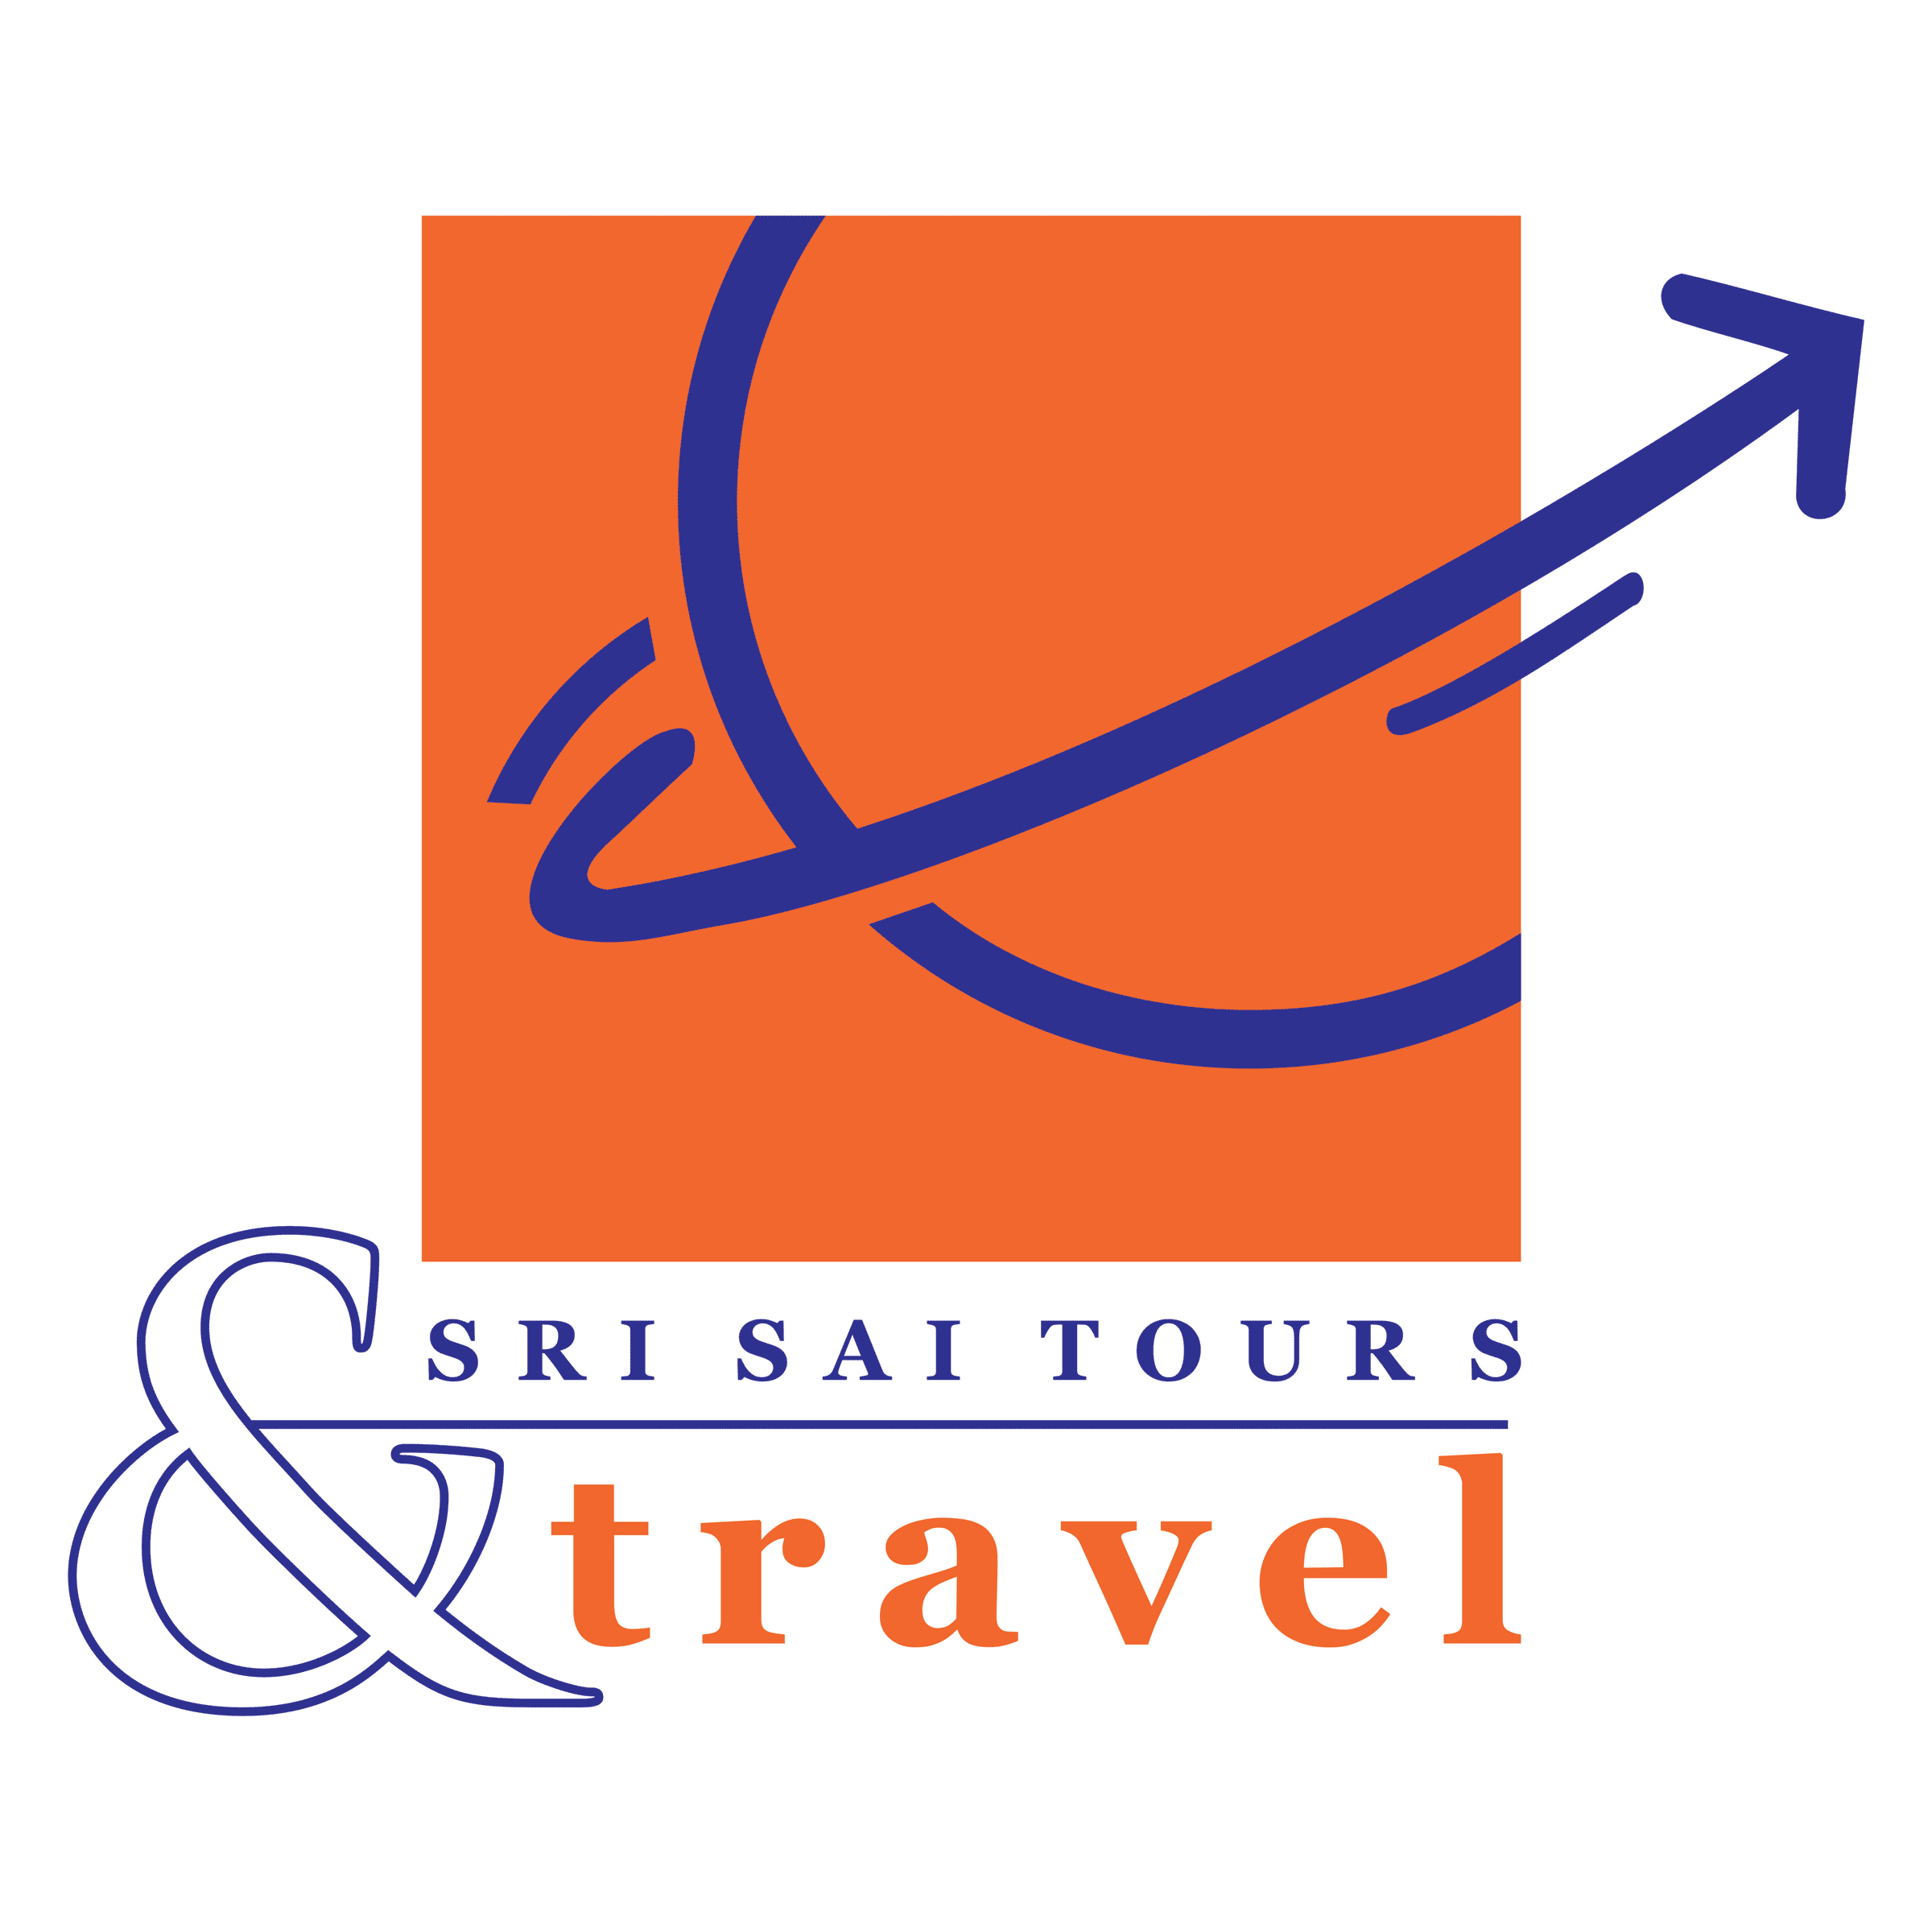 sai tour and travels photos